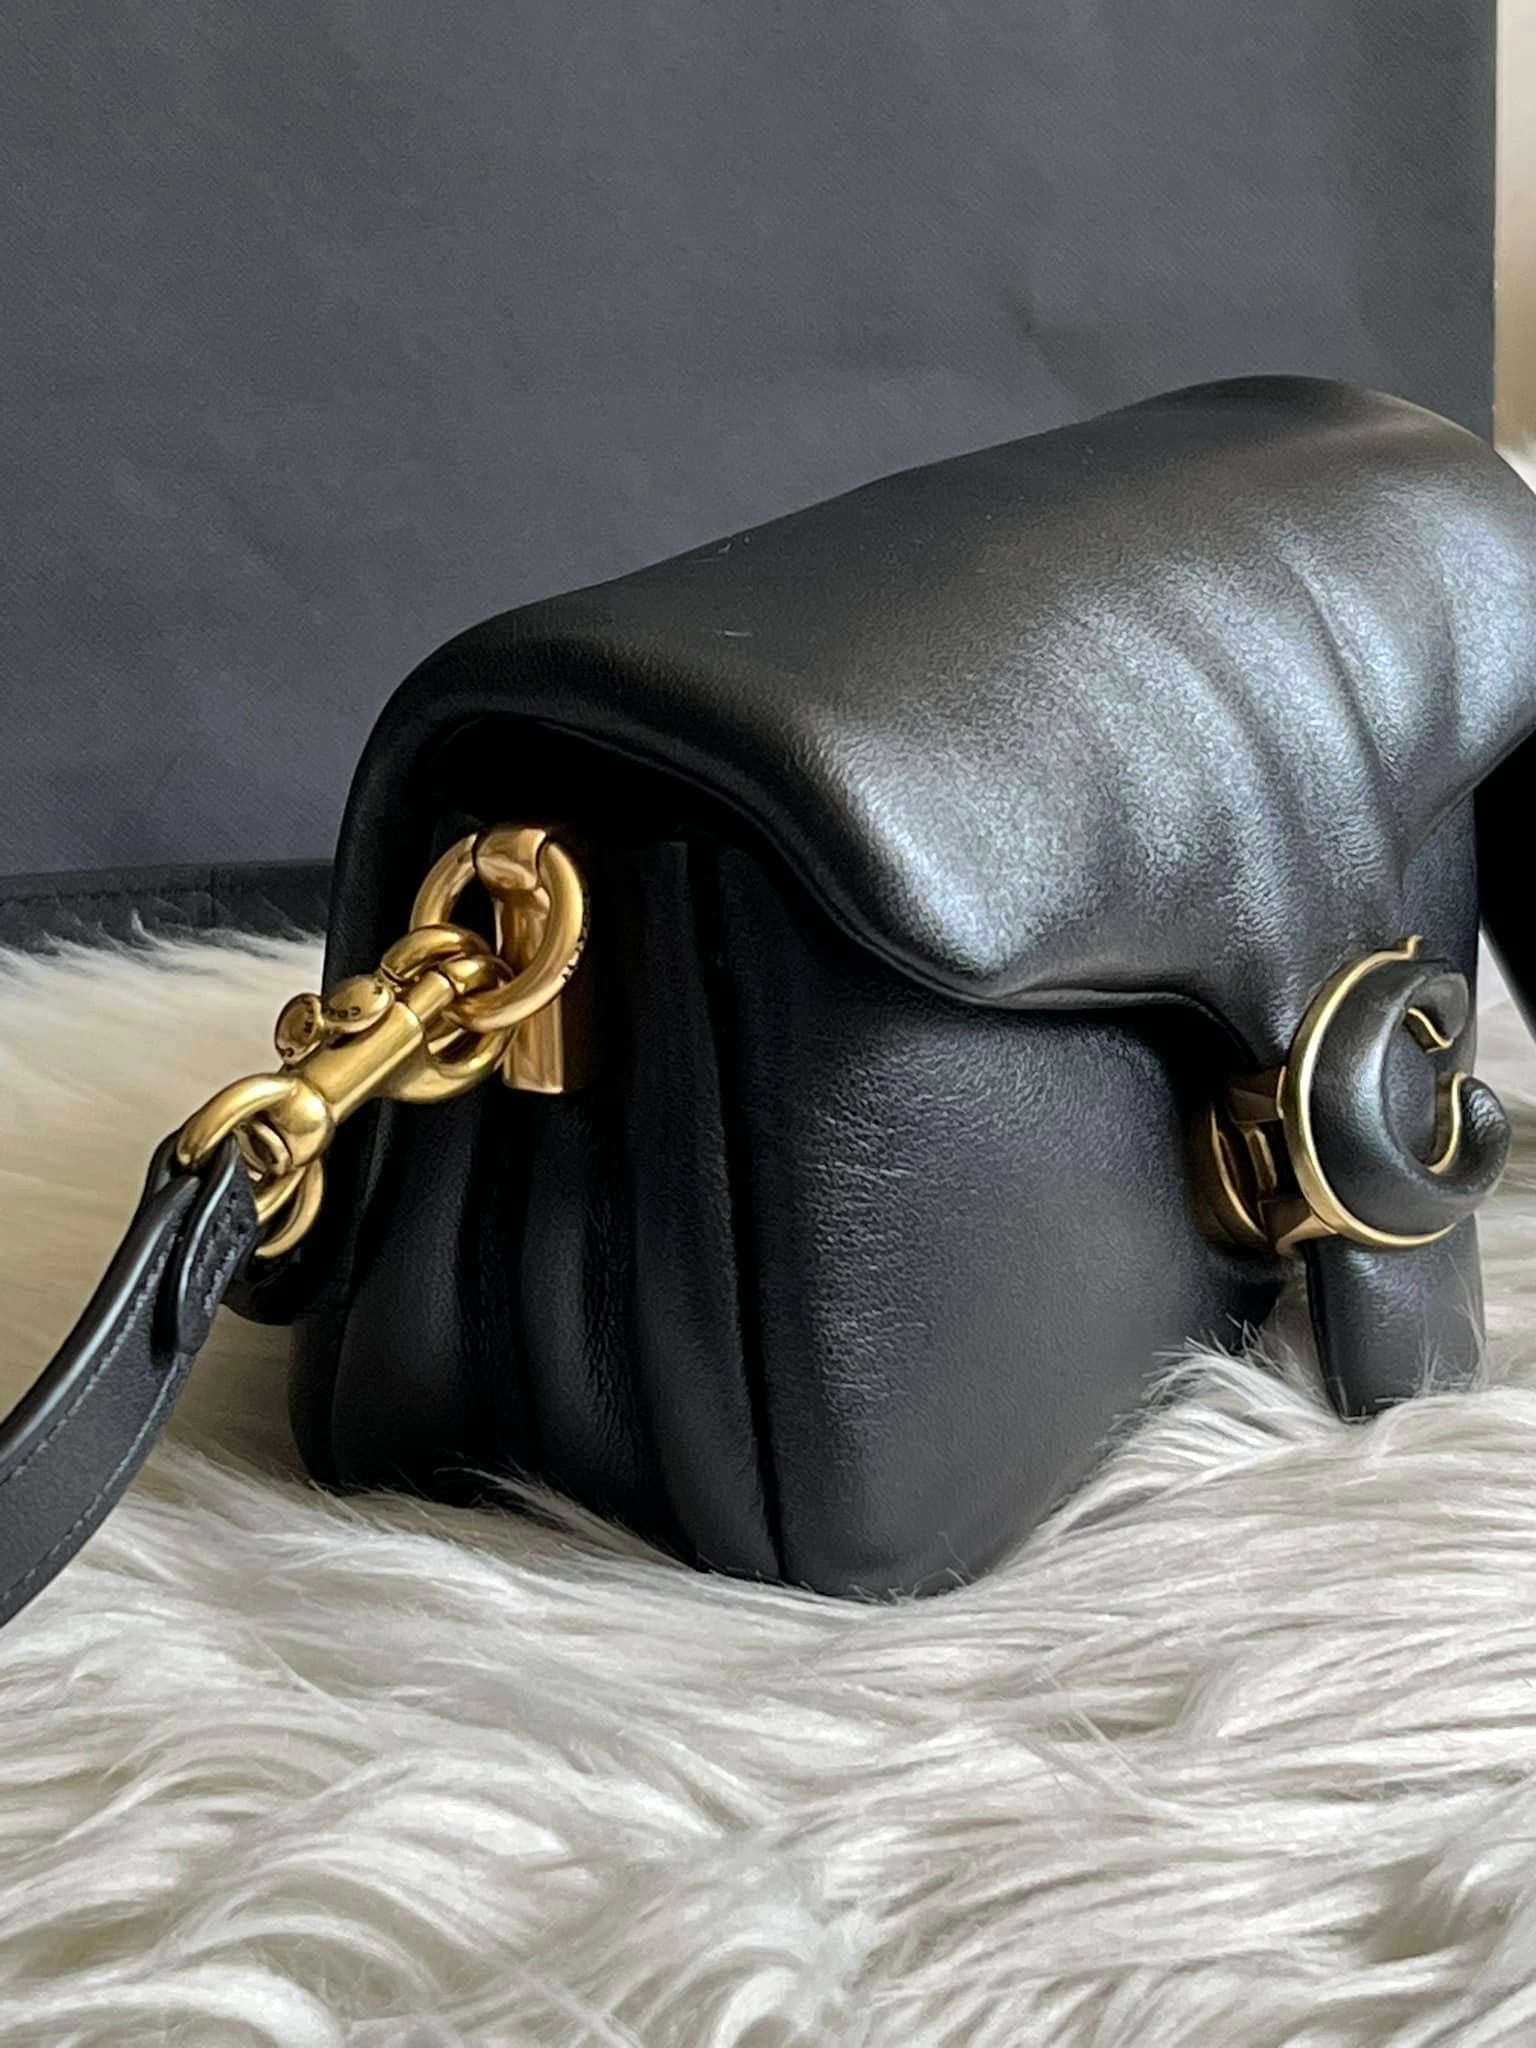 COACH Pillow Tabby Bag 18 in Black